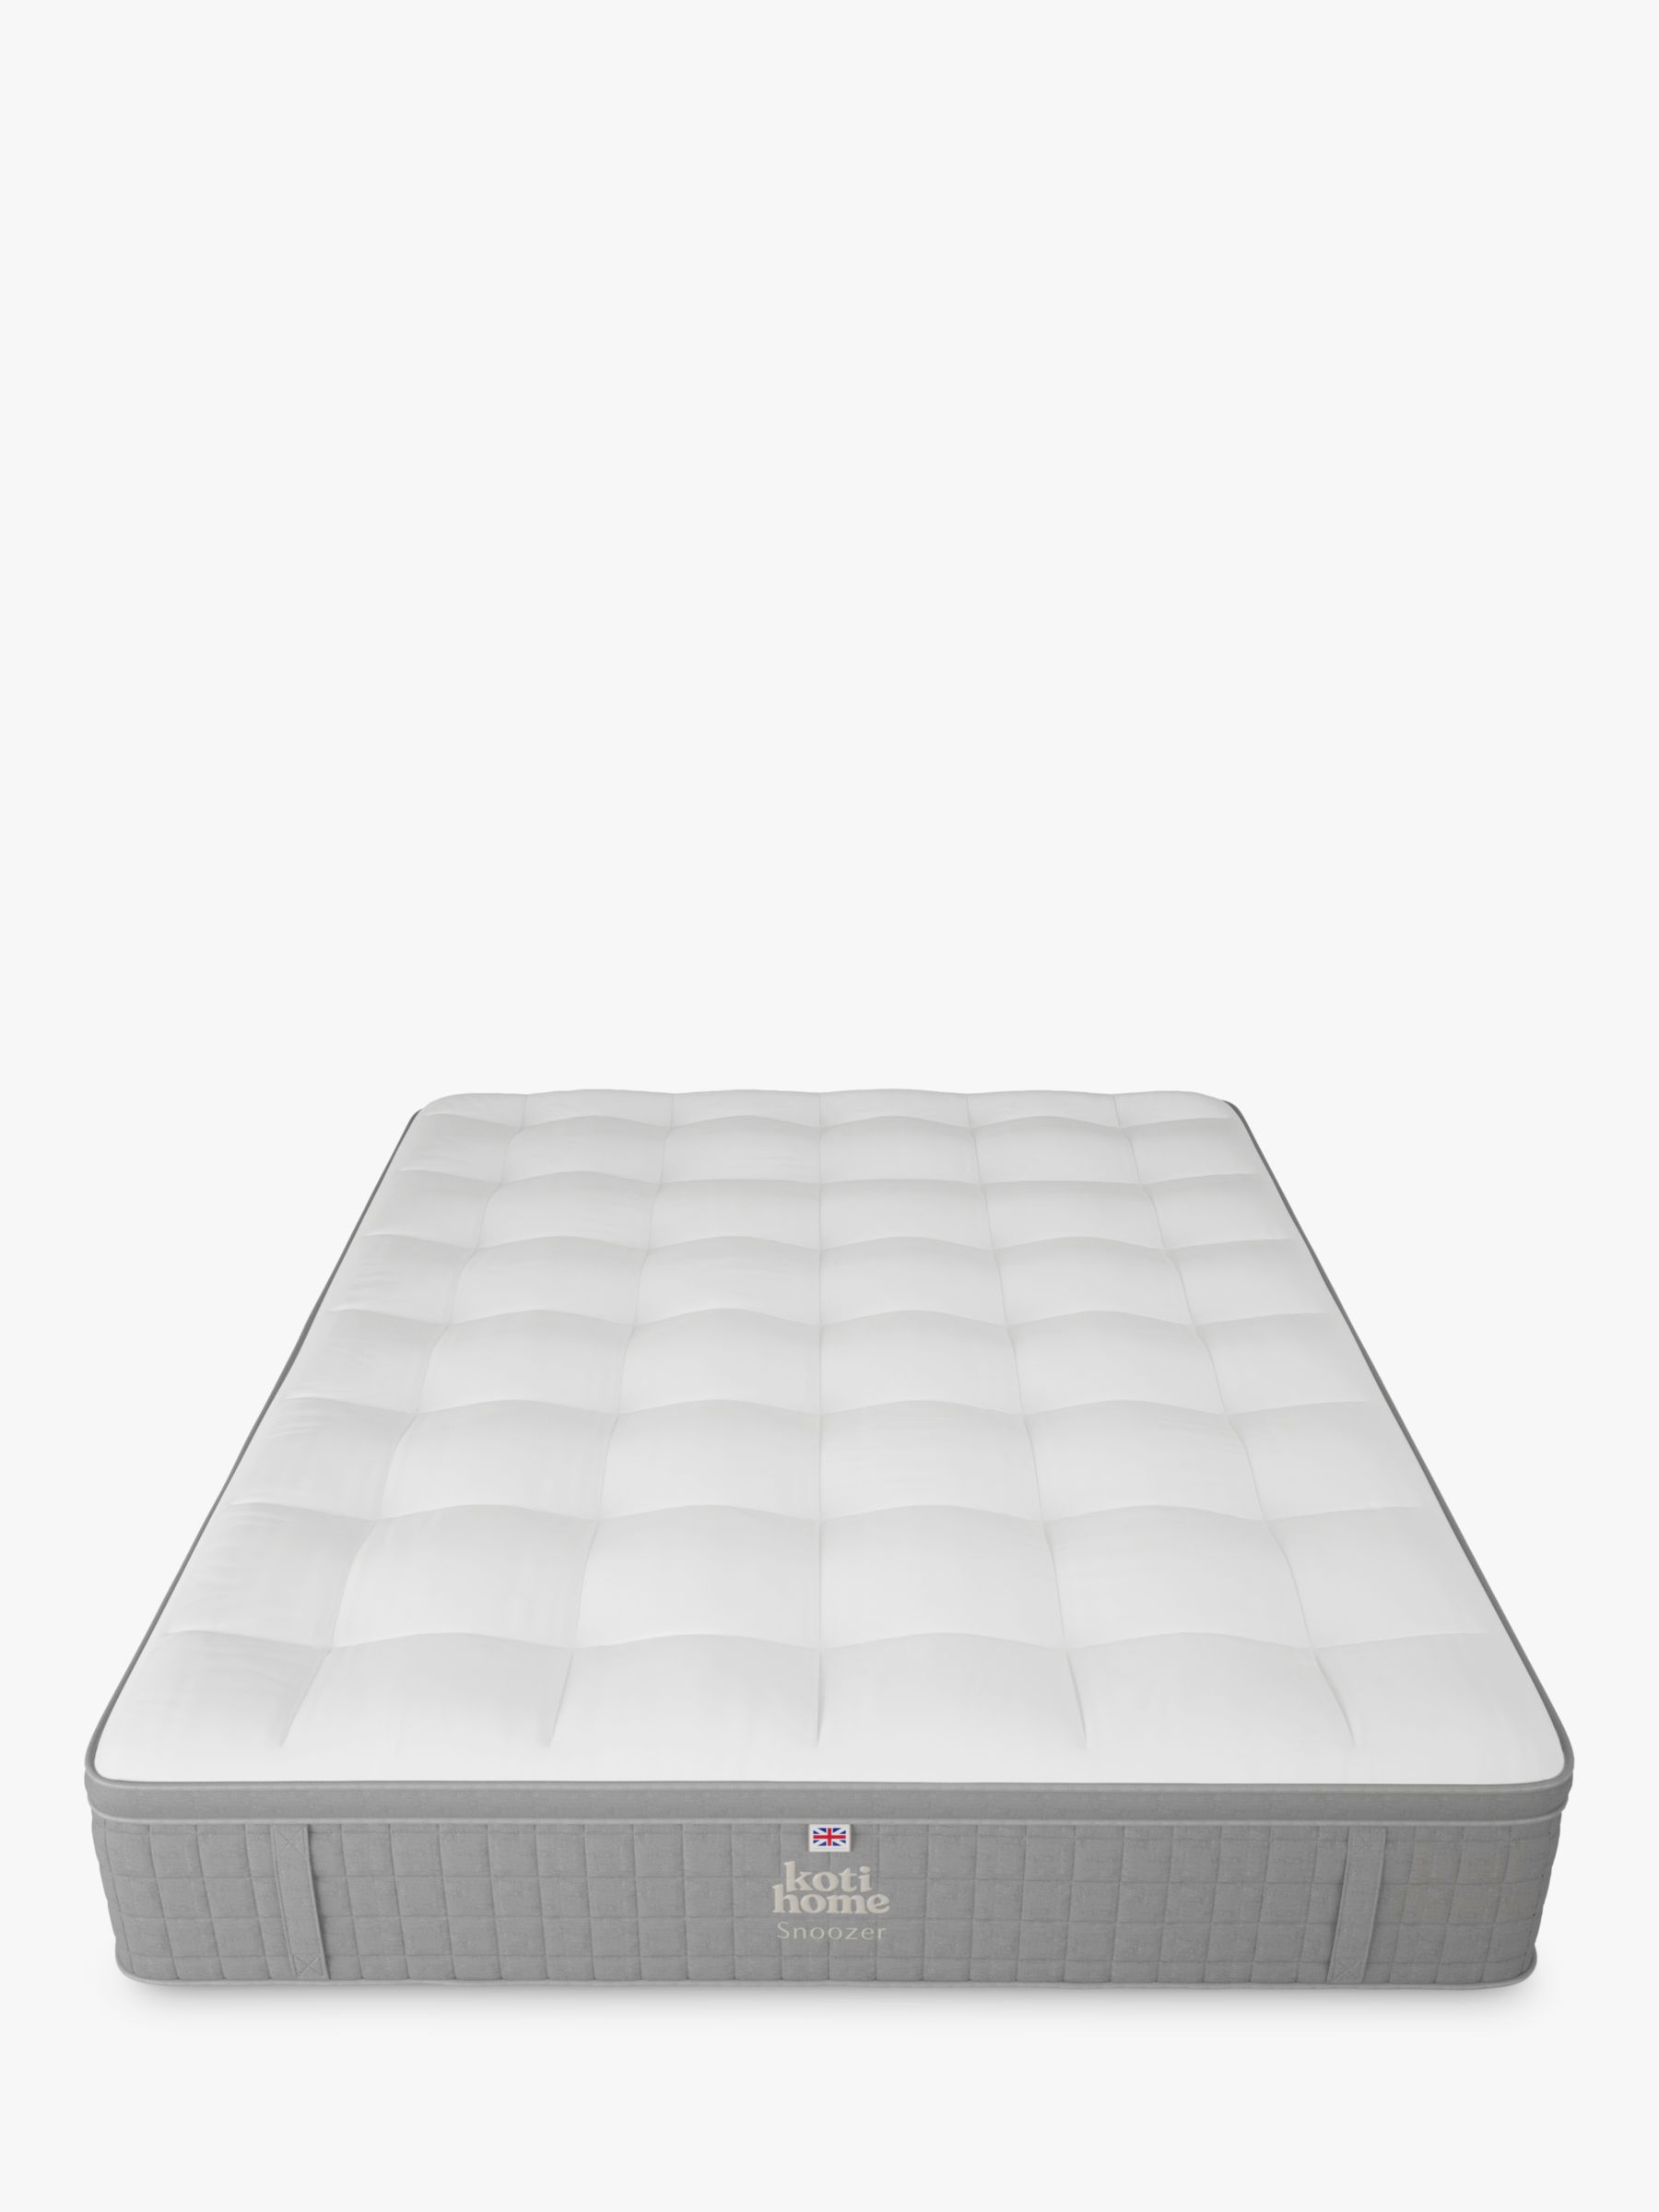 Photo of Koti home snoozer pocket spring mattress medium support super king size